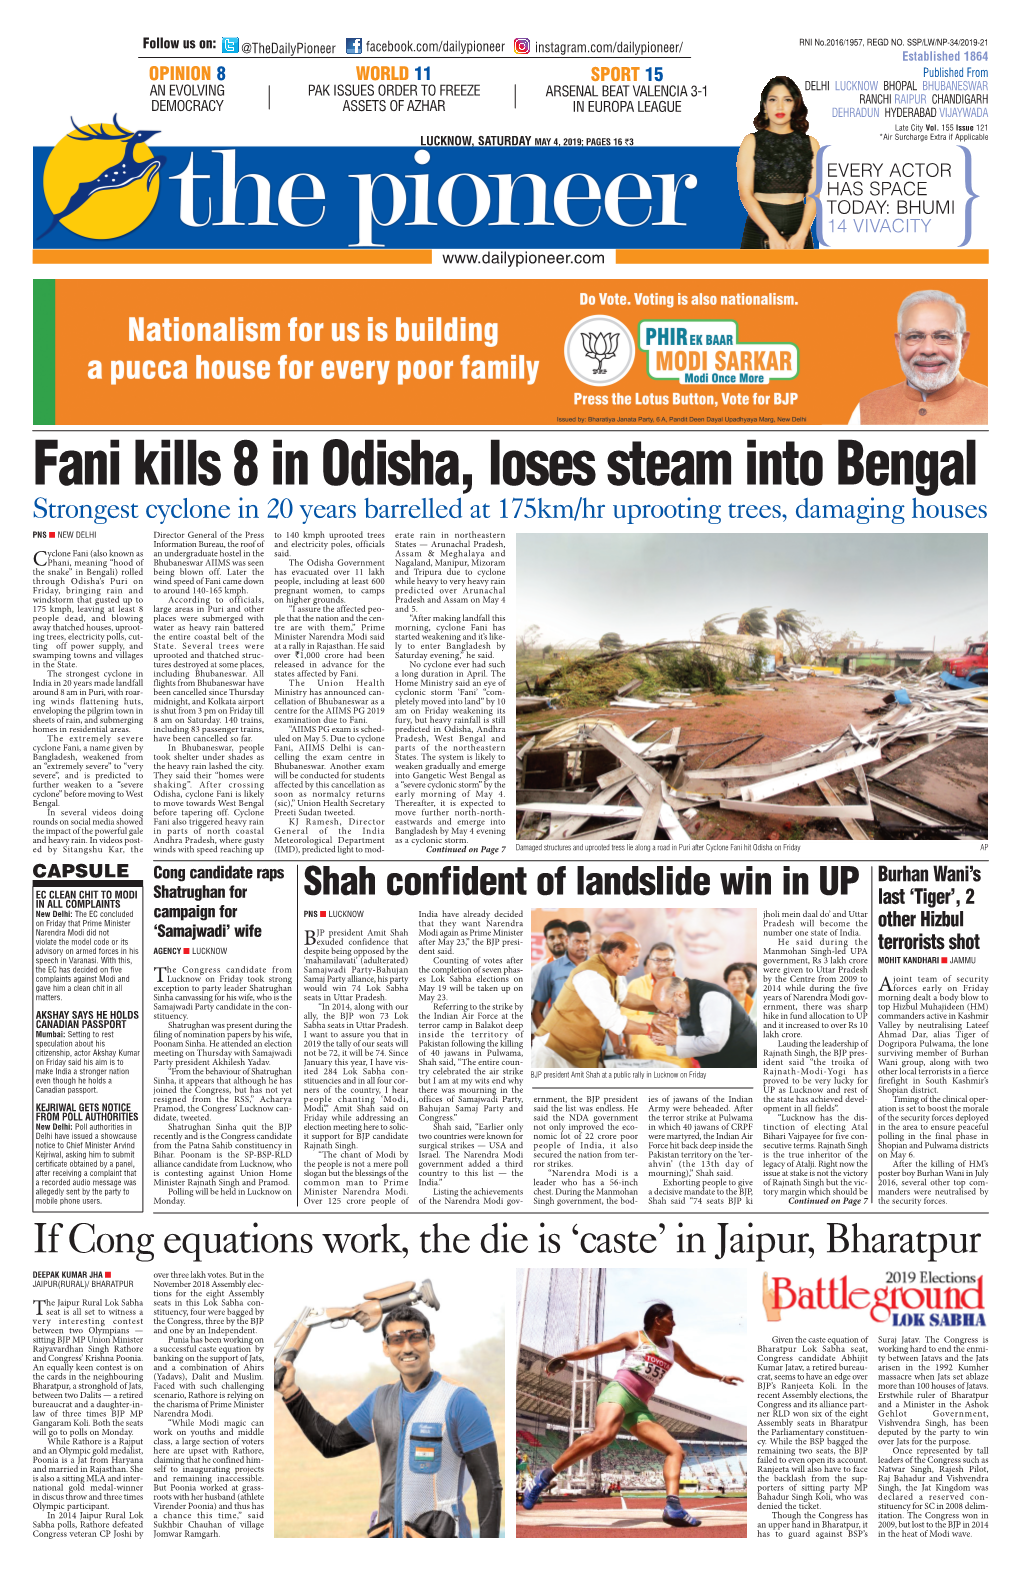 Fani Kills 8 in Odisha, Loses Steam Into Bengal